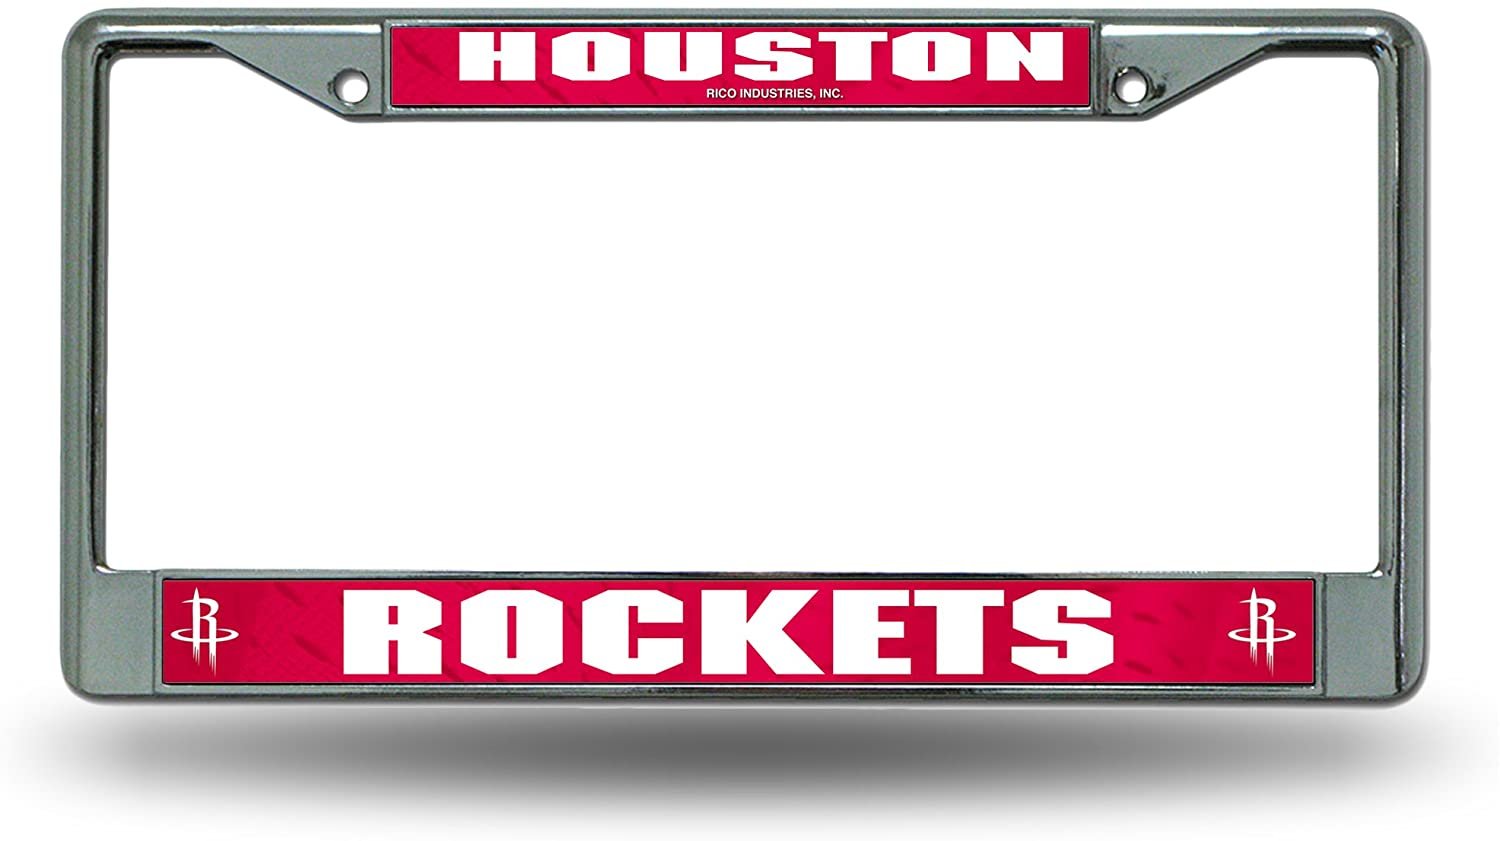 Houston Rockets Premium Metal License License Plate Frame Chrome Tag Cover, 12x6 Inch